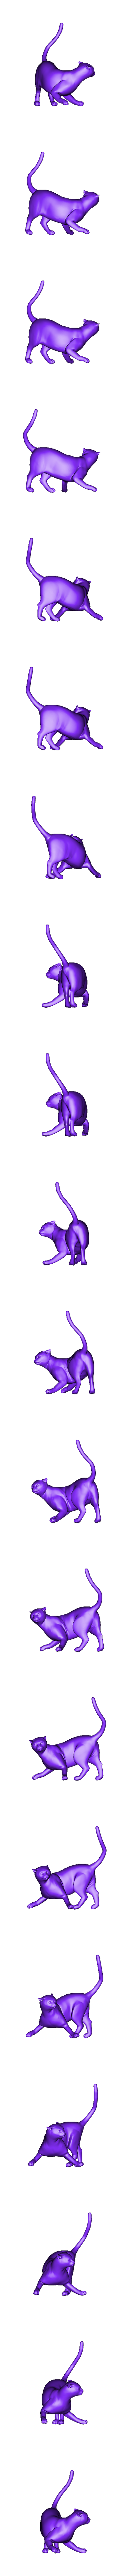 7.stl Download STL file CAT PACK 3 • 3D printing design, gigi_toys